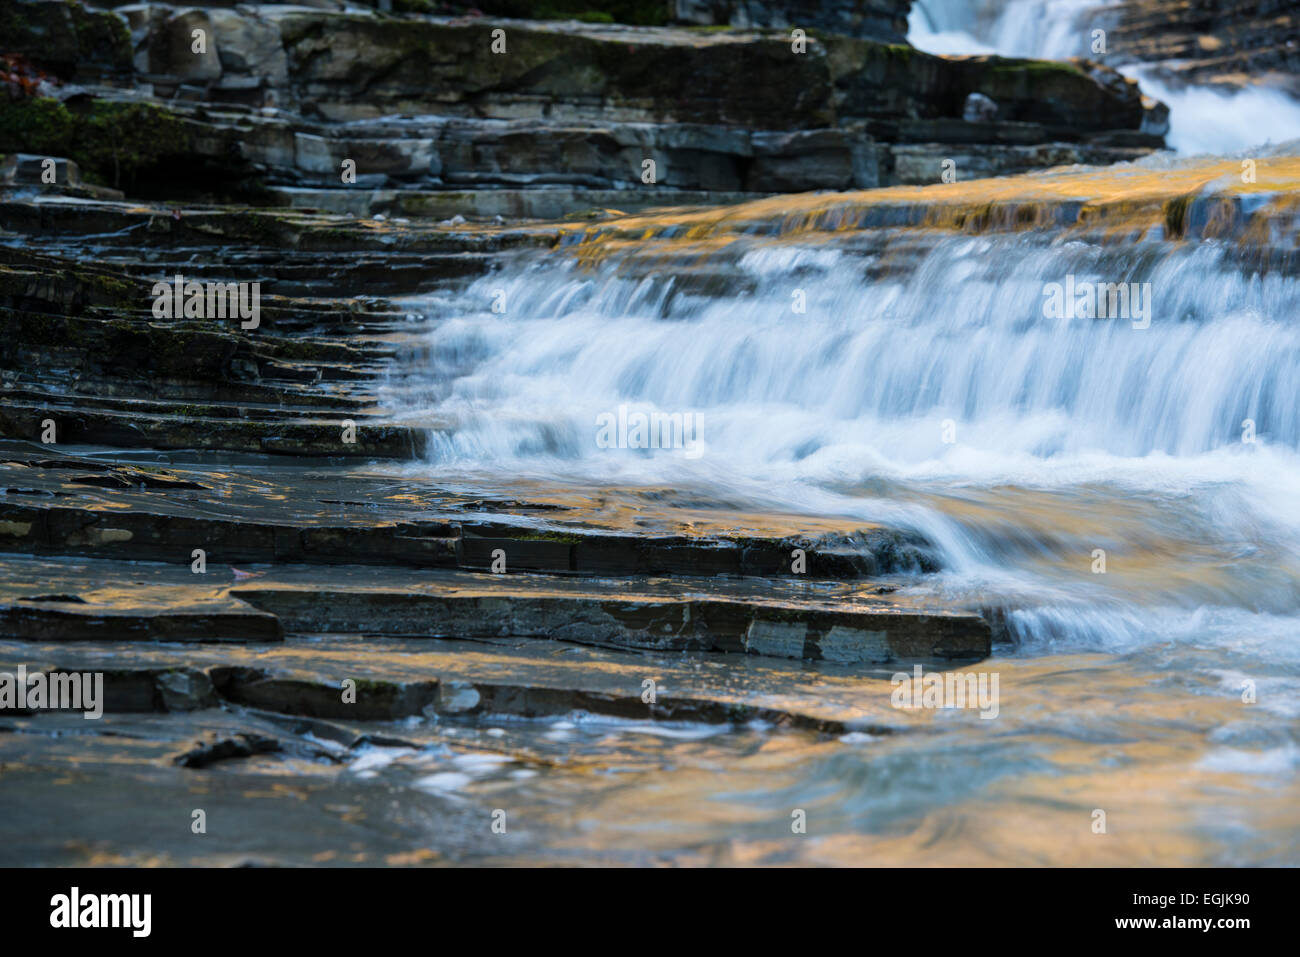 Taugl stream, Tauglbach or Taugl River, Taugl River Gorge, Tennengau region, Salzburg State, Austria Stock Photo